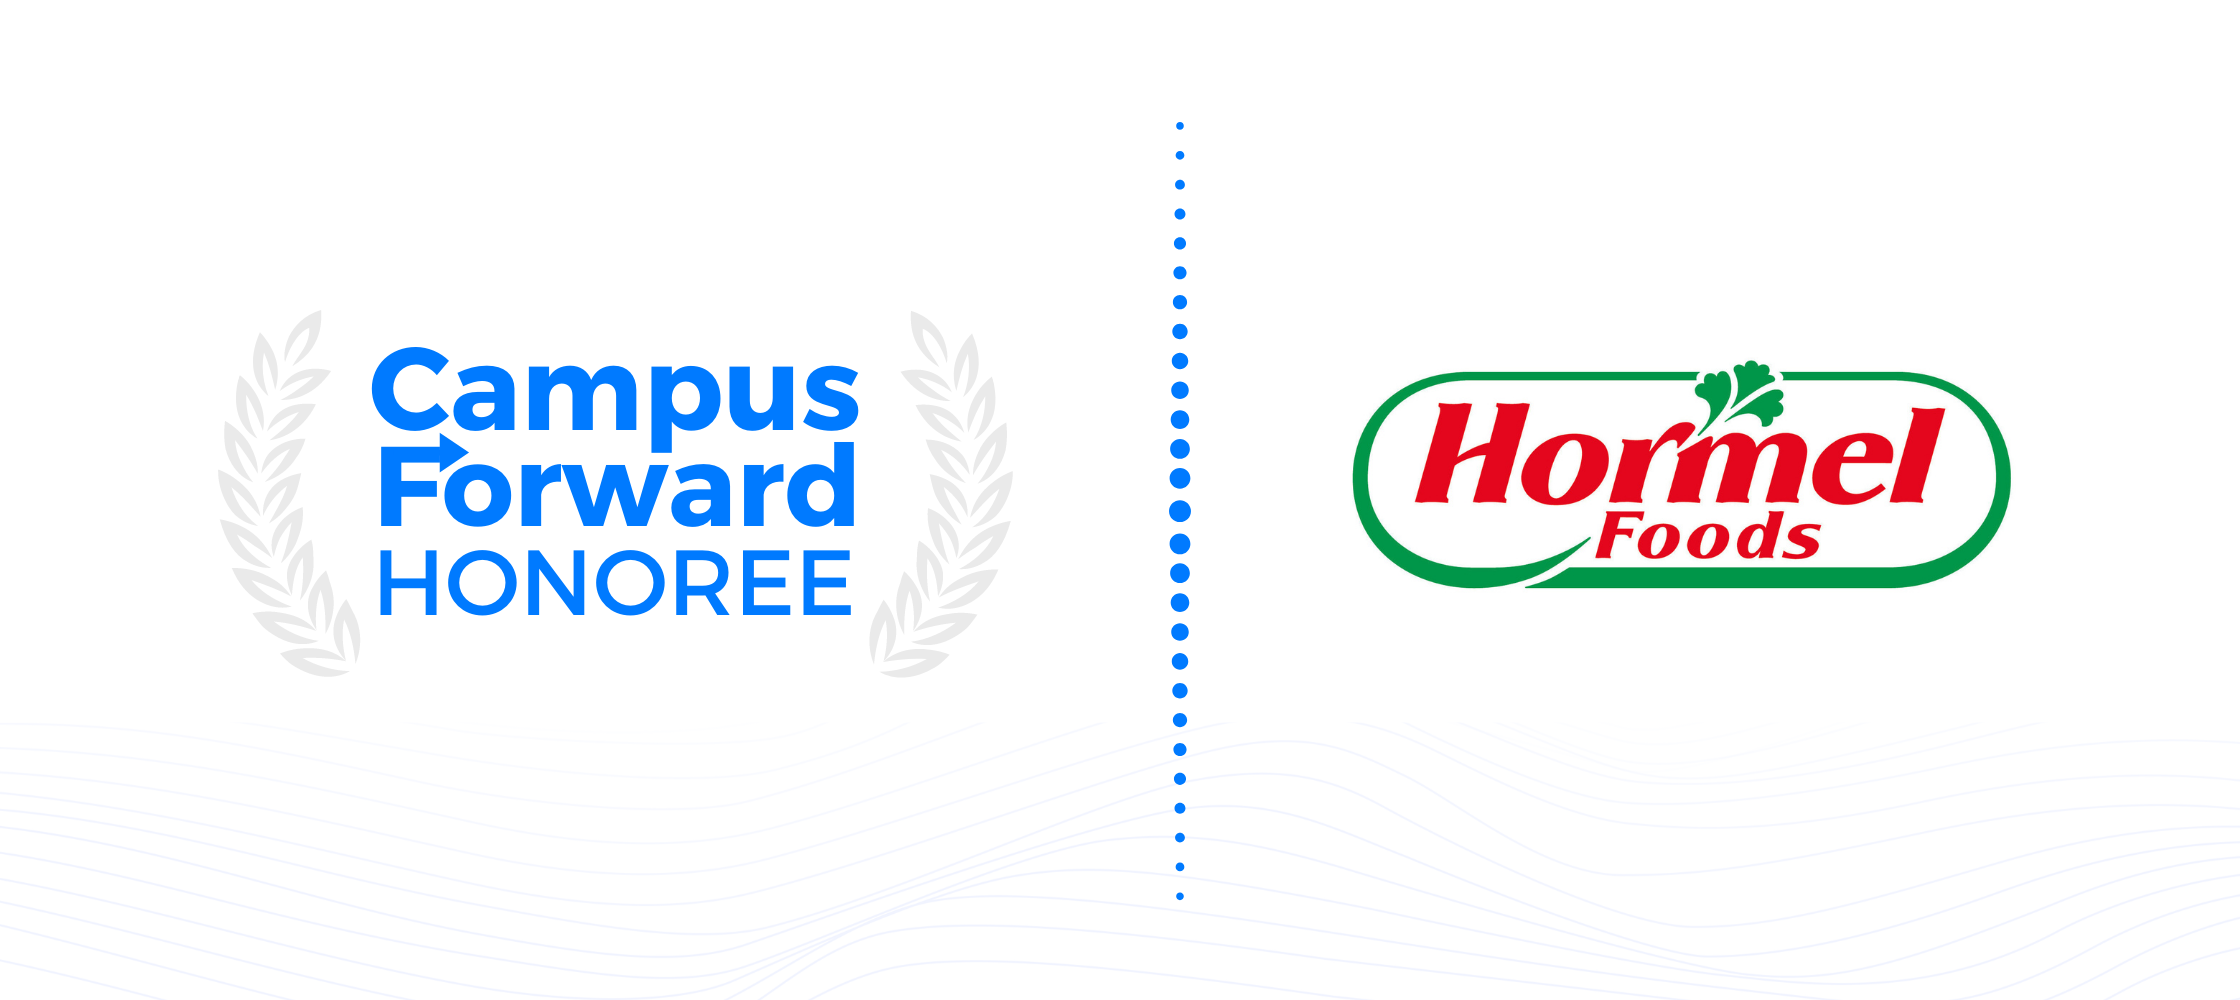 Campus Forward Honoree - Hormel Foods